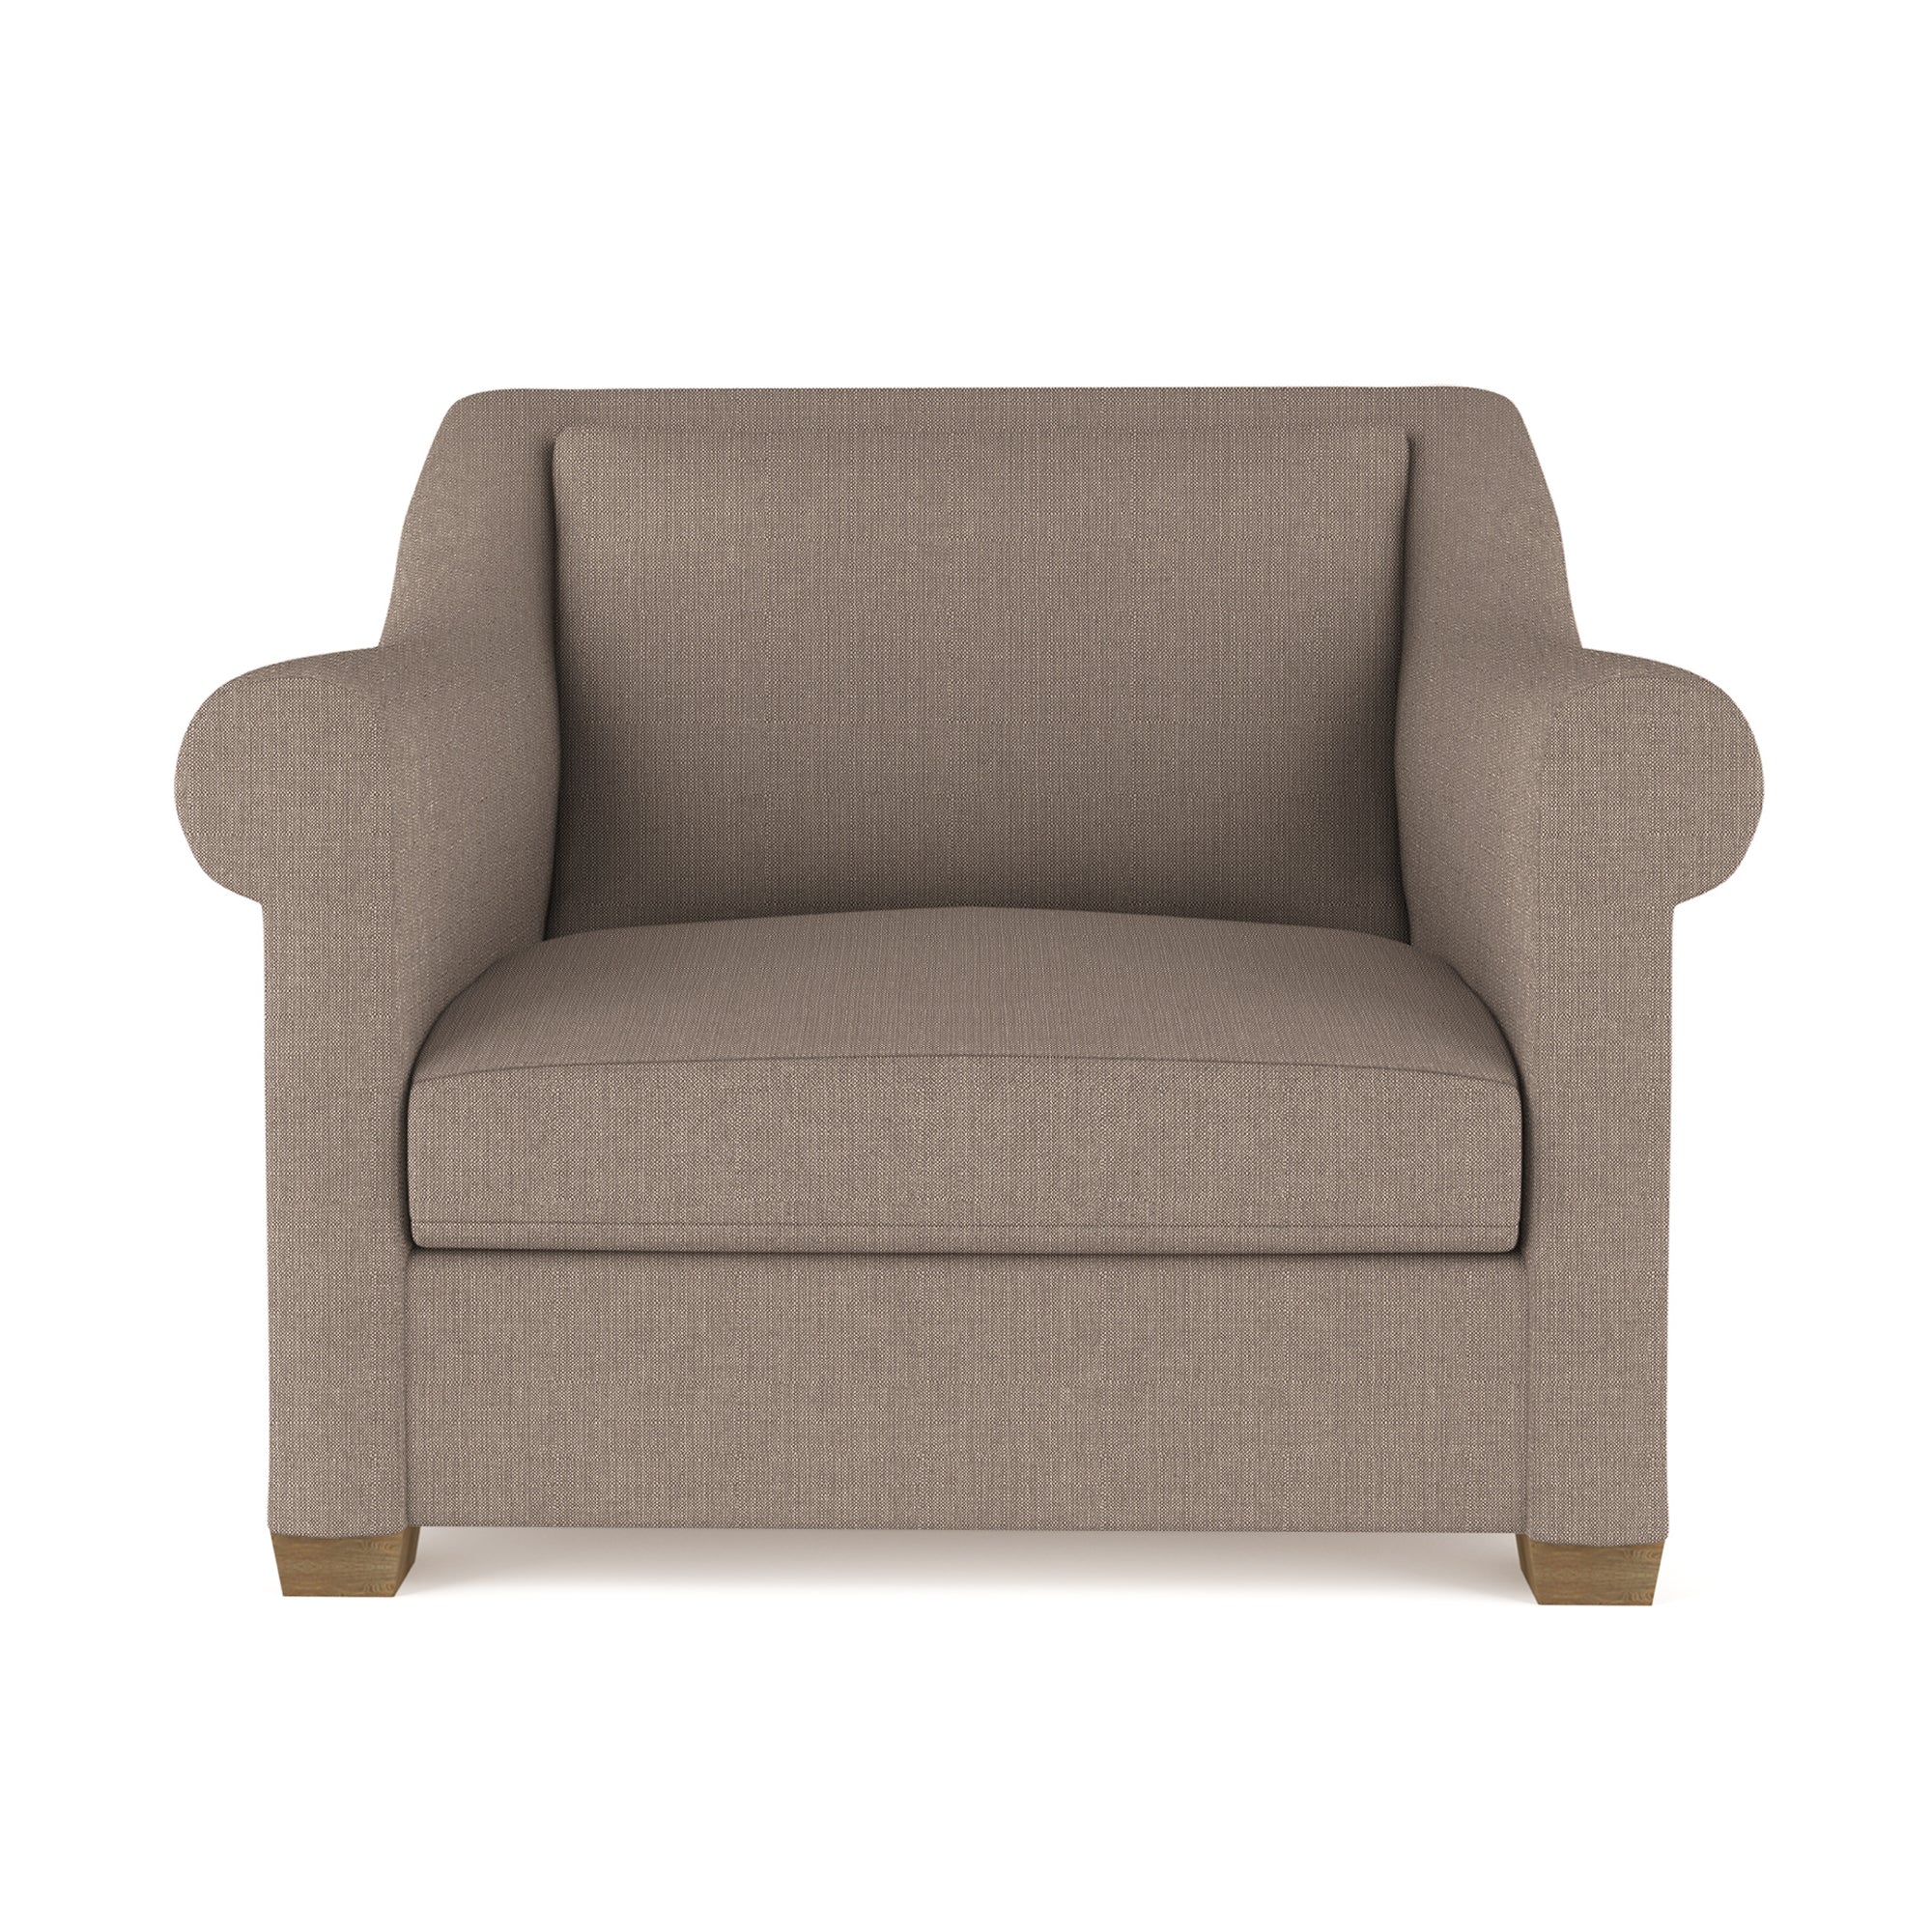 Thompson Chair - Pumice Box Weave Linen